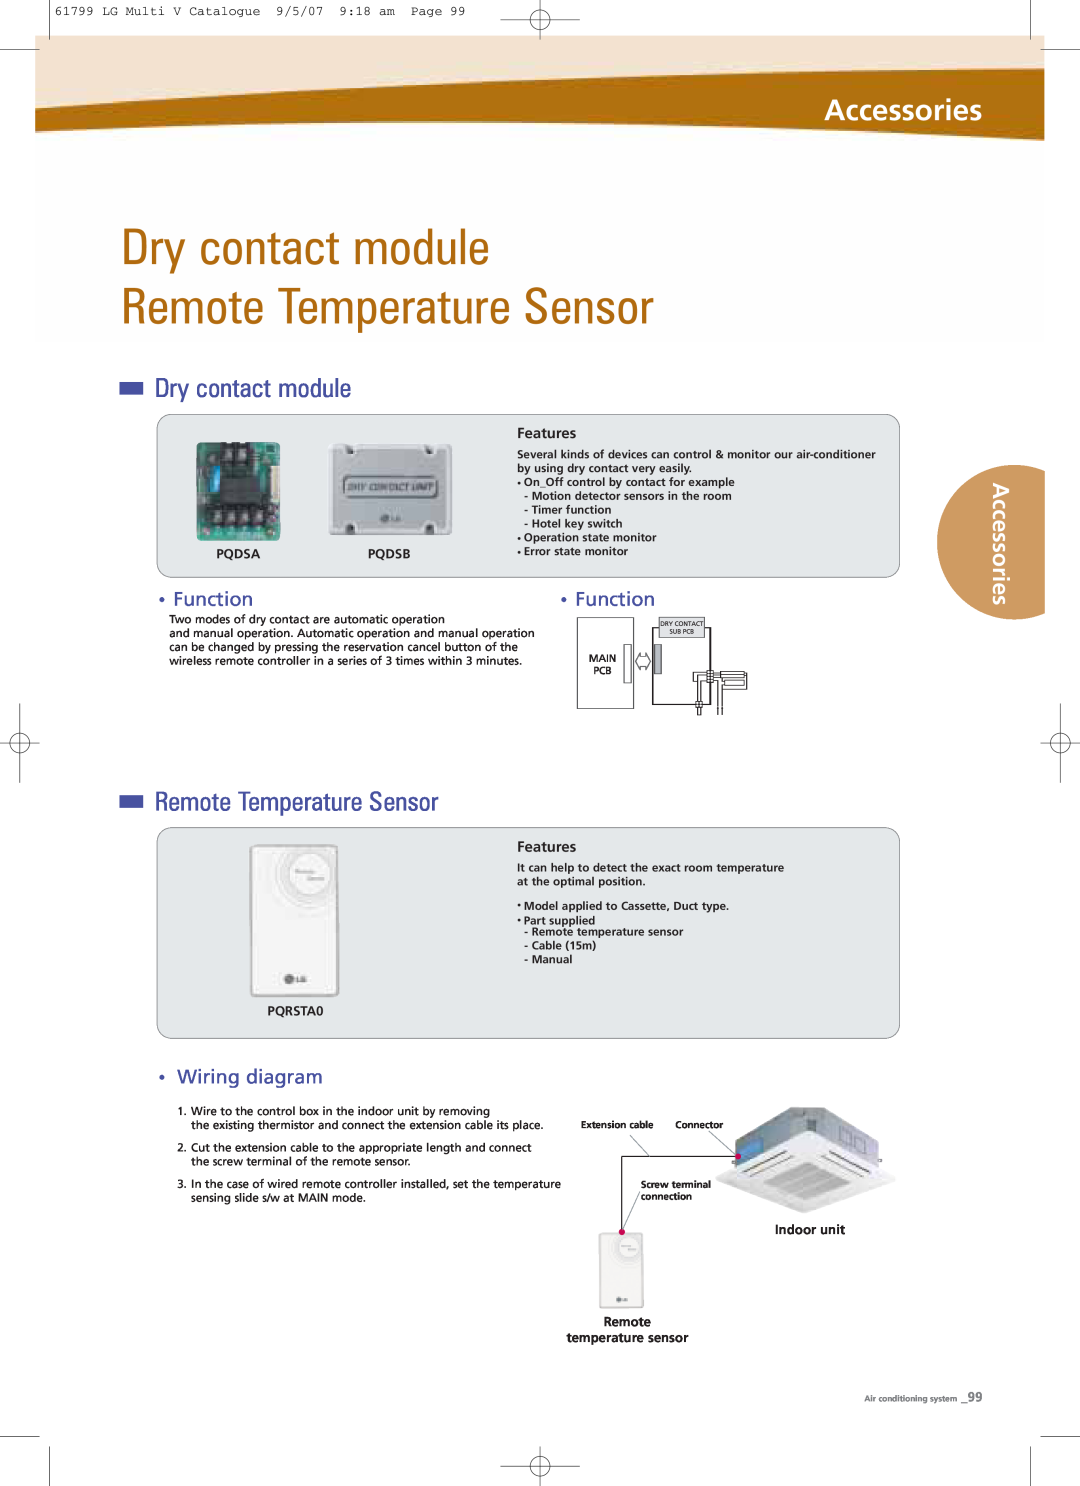 LG Electronics PRHR040 Dry contact module Remote Temperature Sensor, Accessories, Function, Wiring diagram, Pqdsa, Pqdsb 